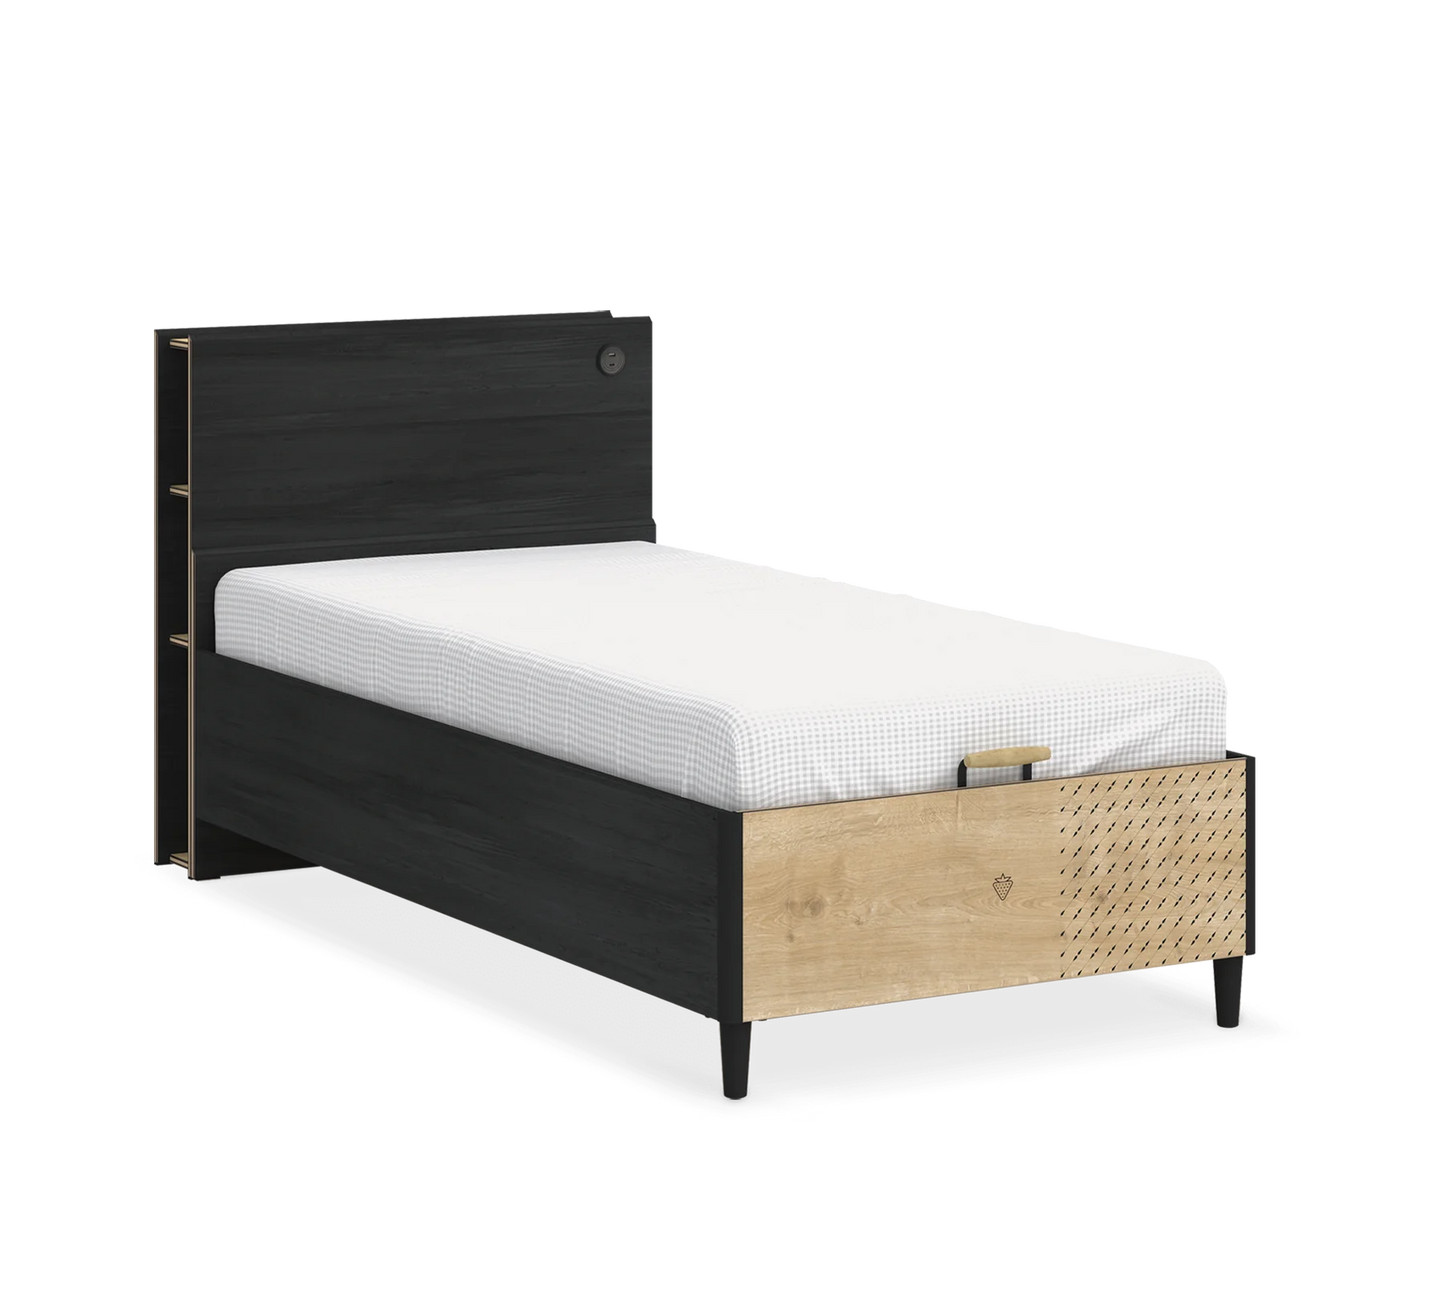 Легло с база без табла Black (100/200см)